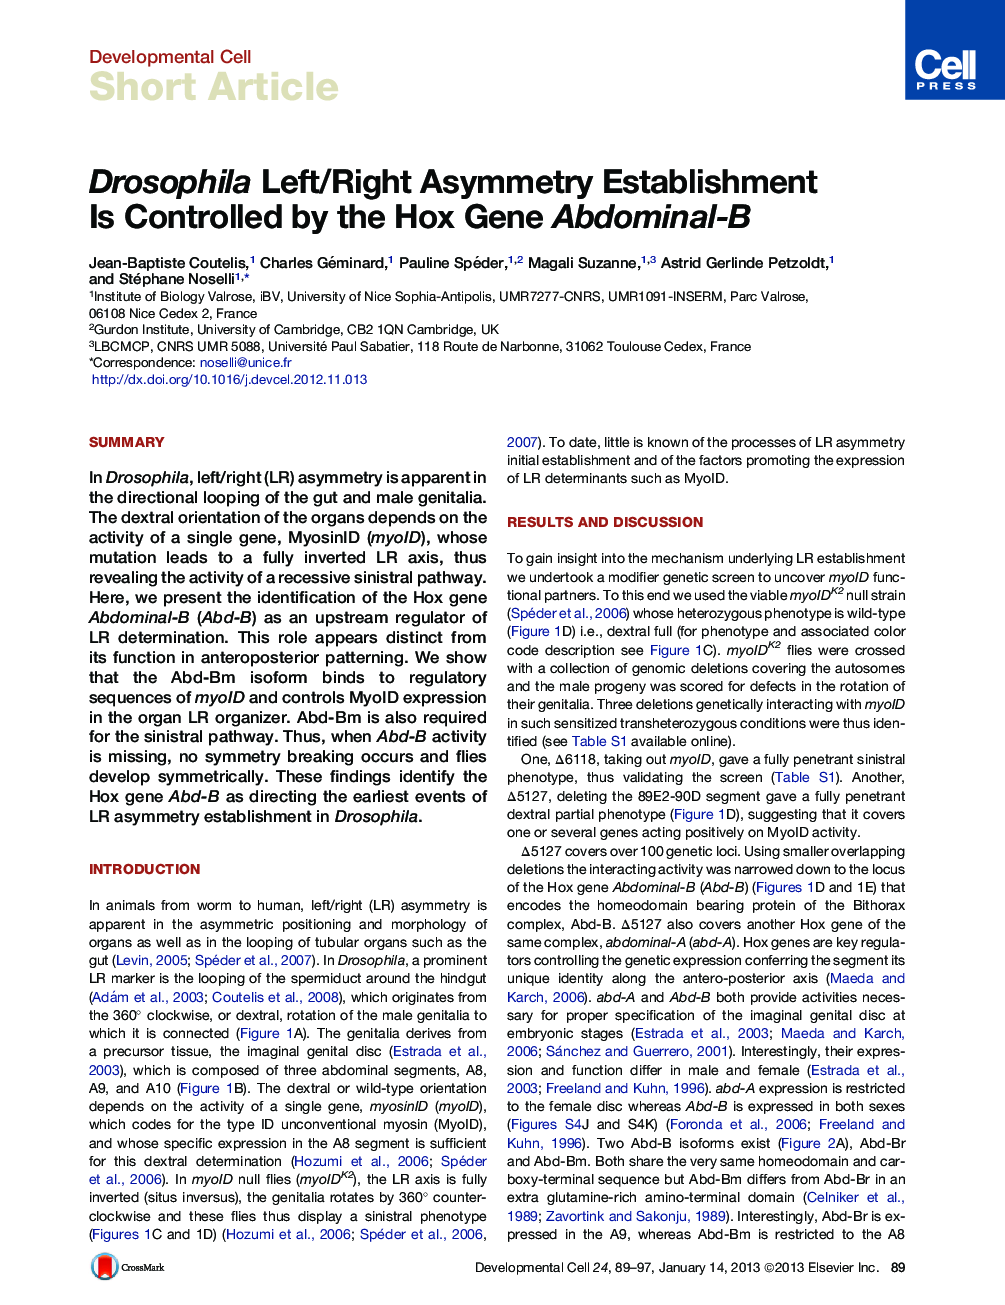 Drosophila Left/Right Asymmetry Establishment Is Controlled by the Hox Gene Abdominal-B